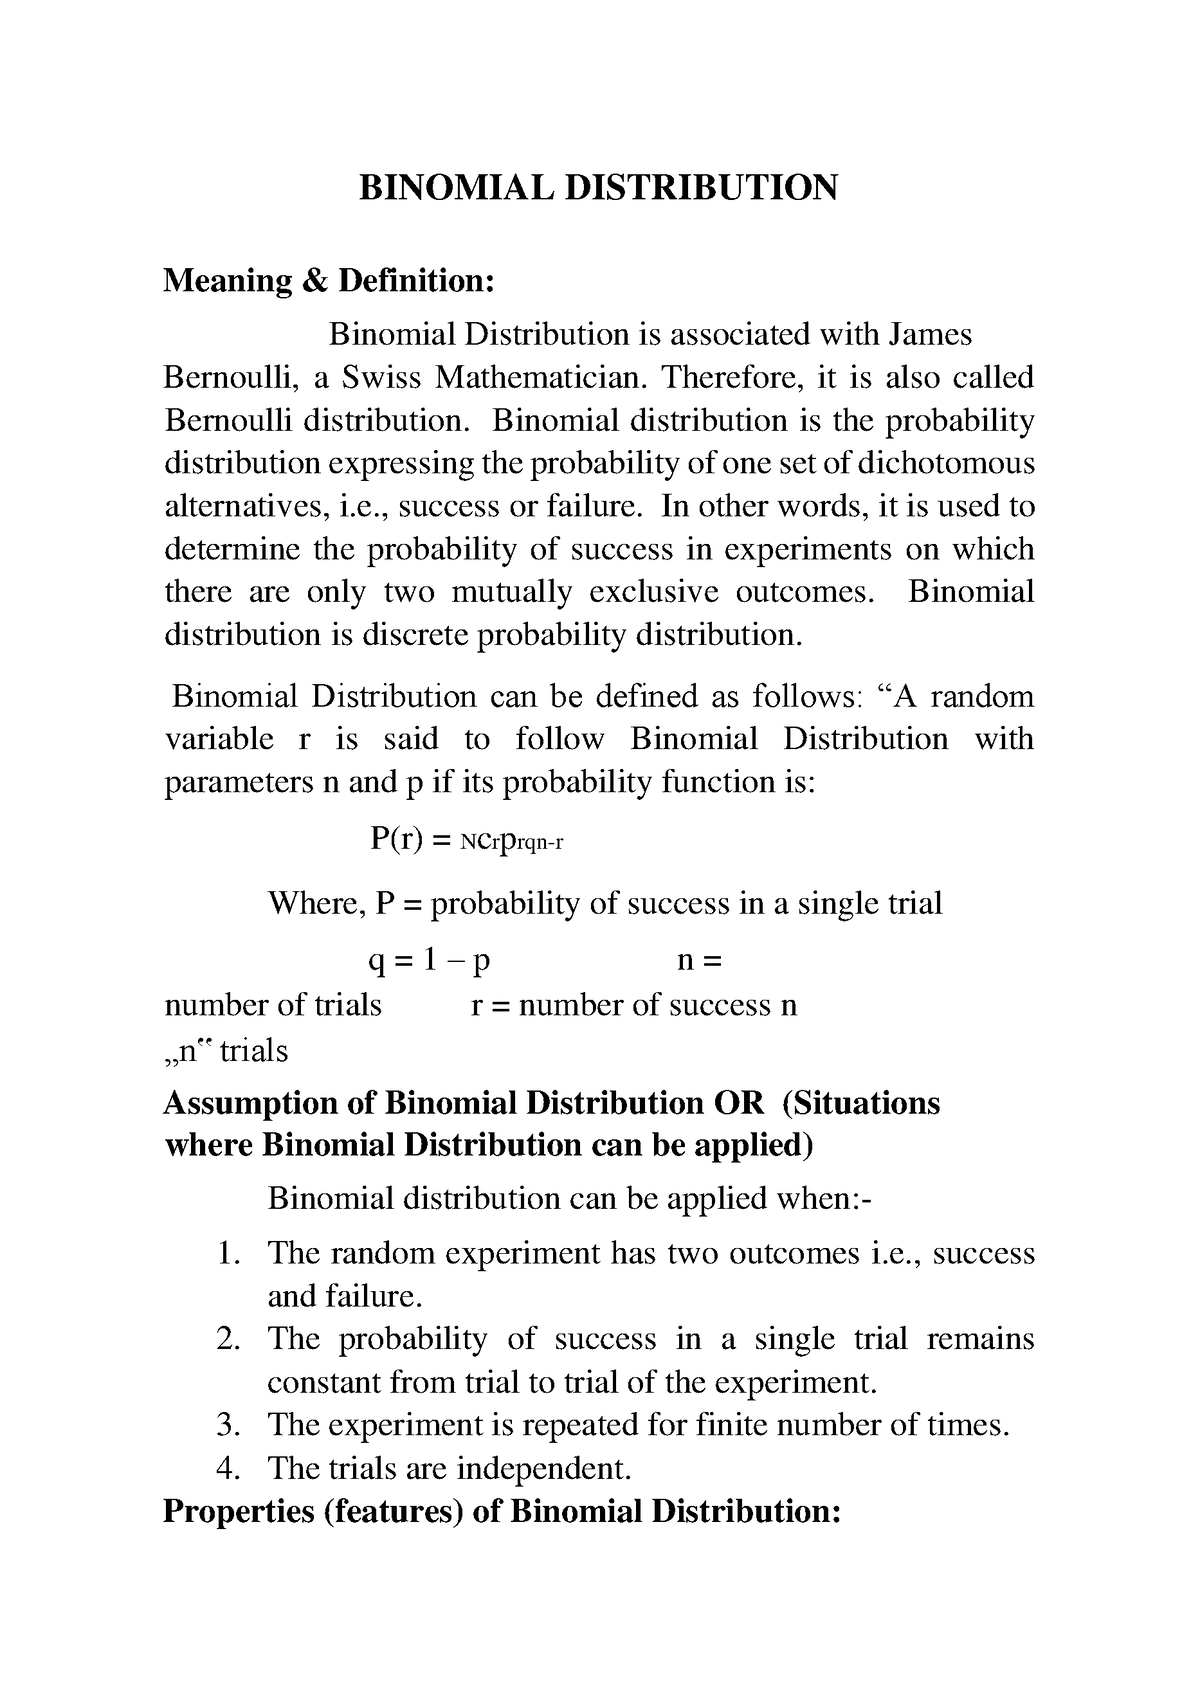 binomial-distribution-binomial-distribution-meaning-definition